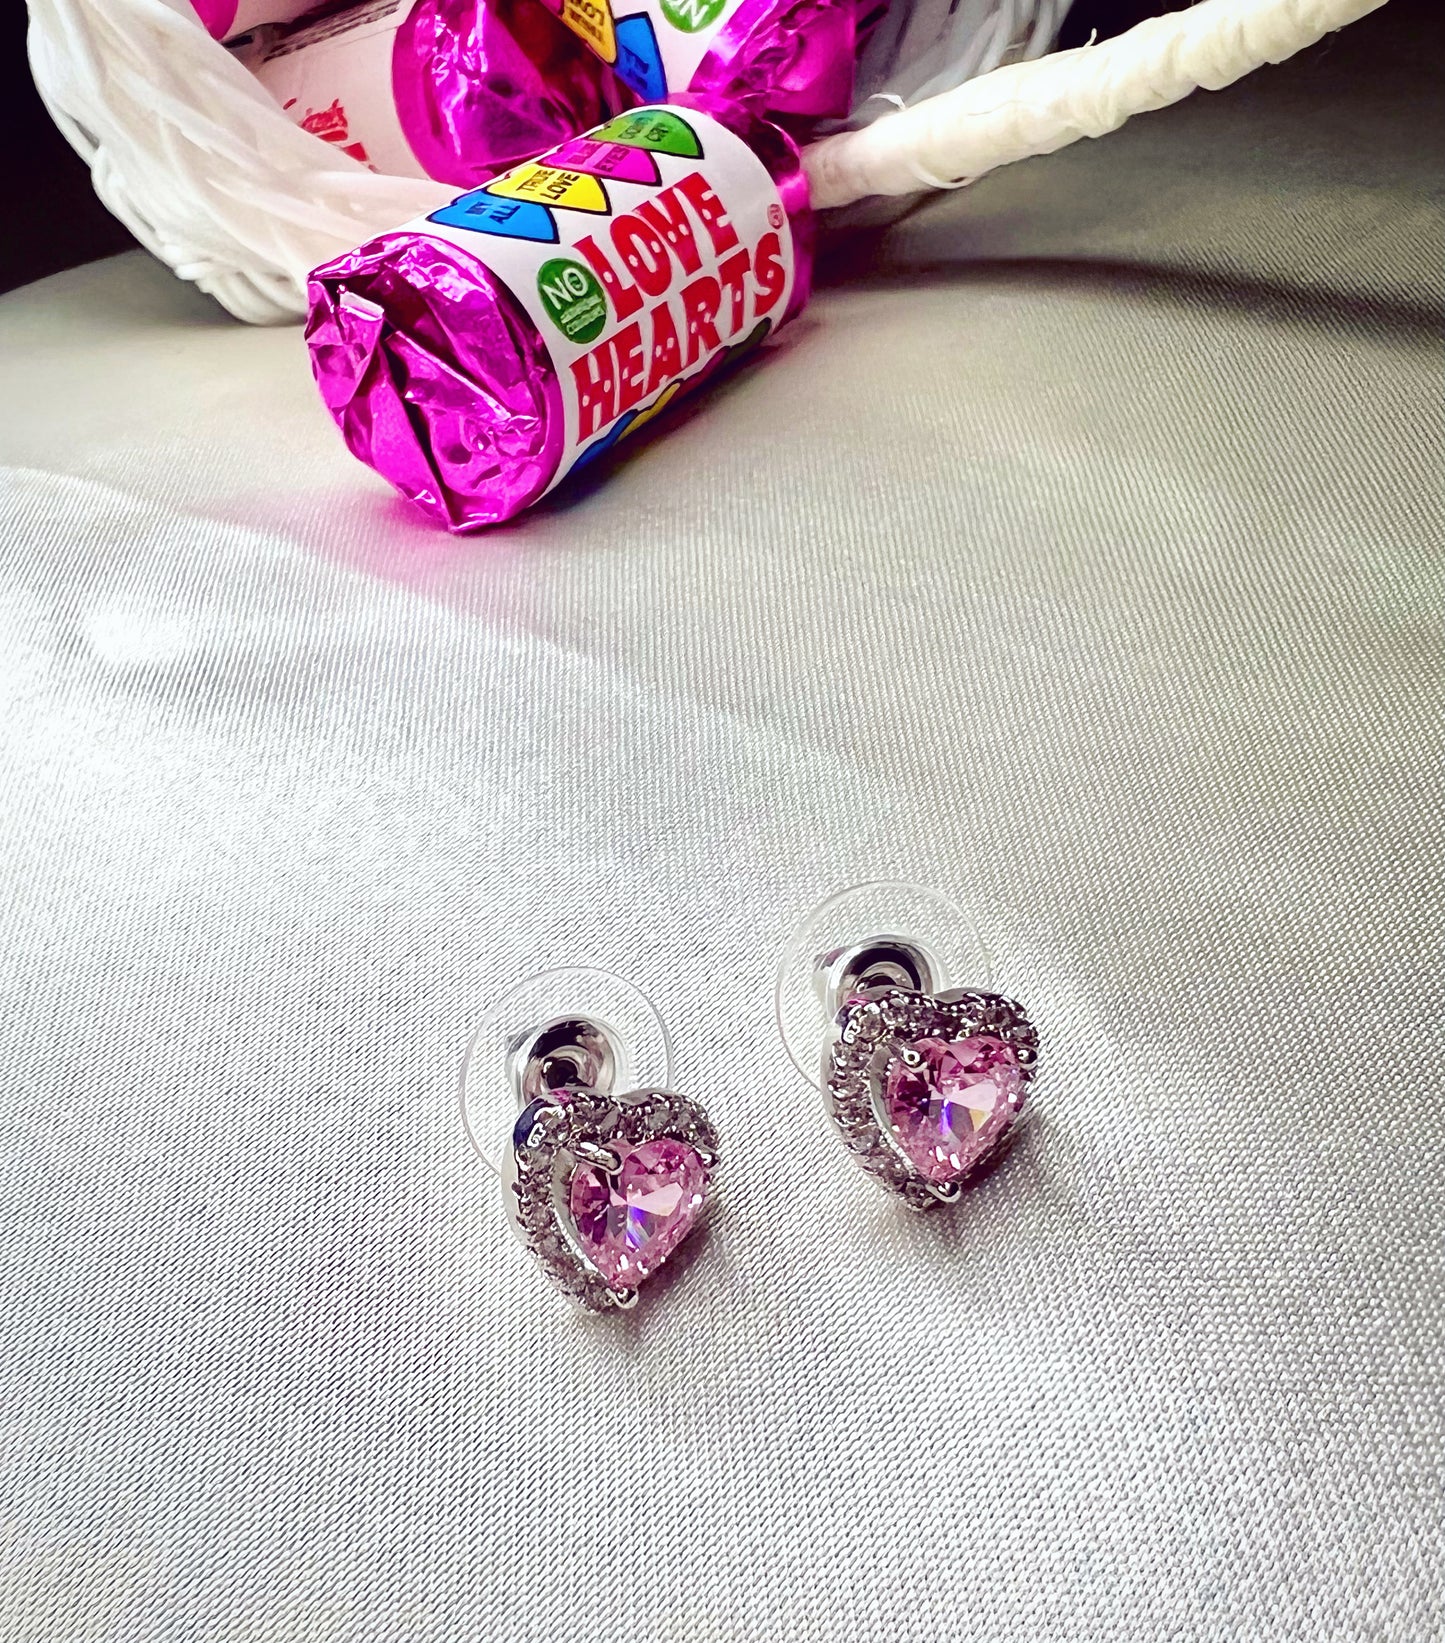 Sweetheart Stud Earrings- Rhodium plated